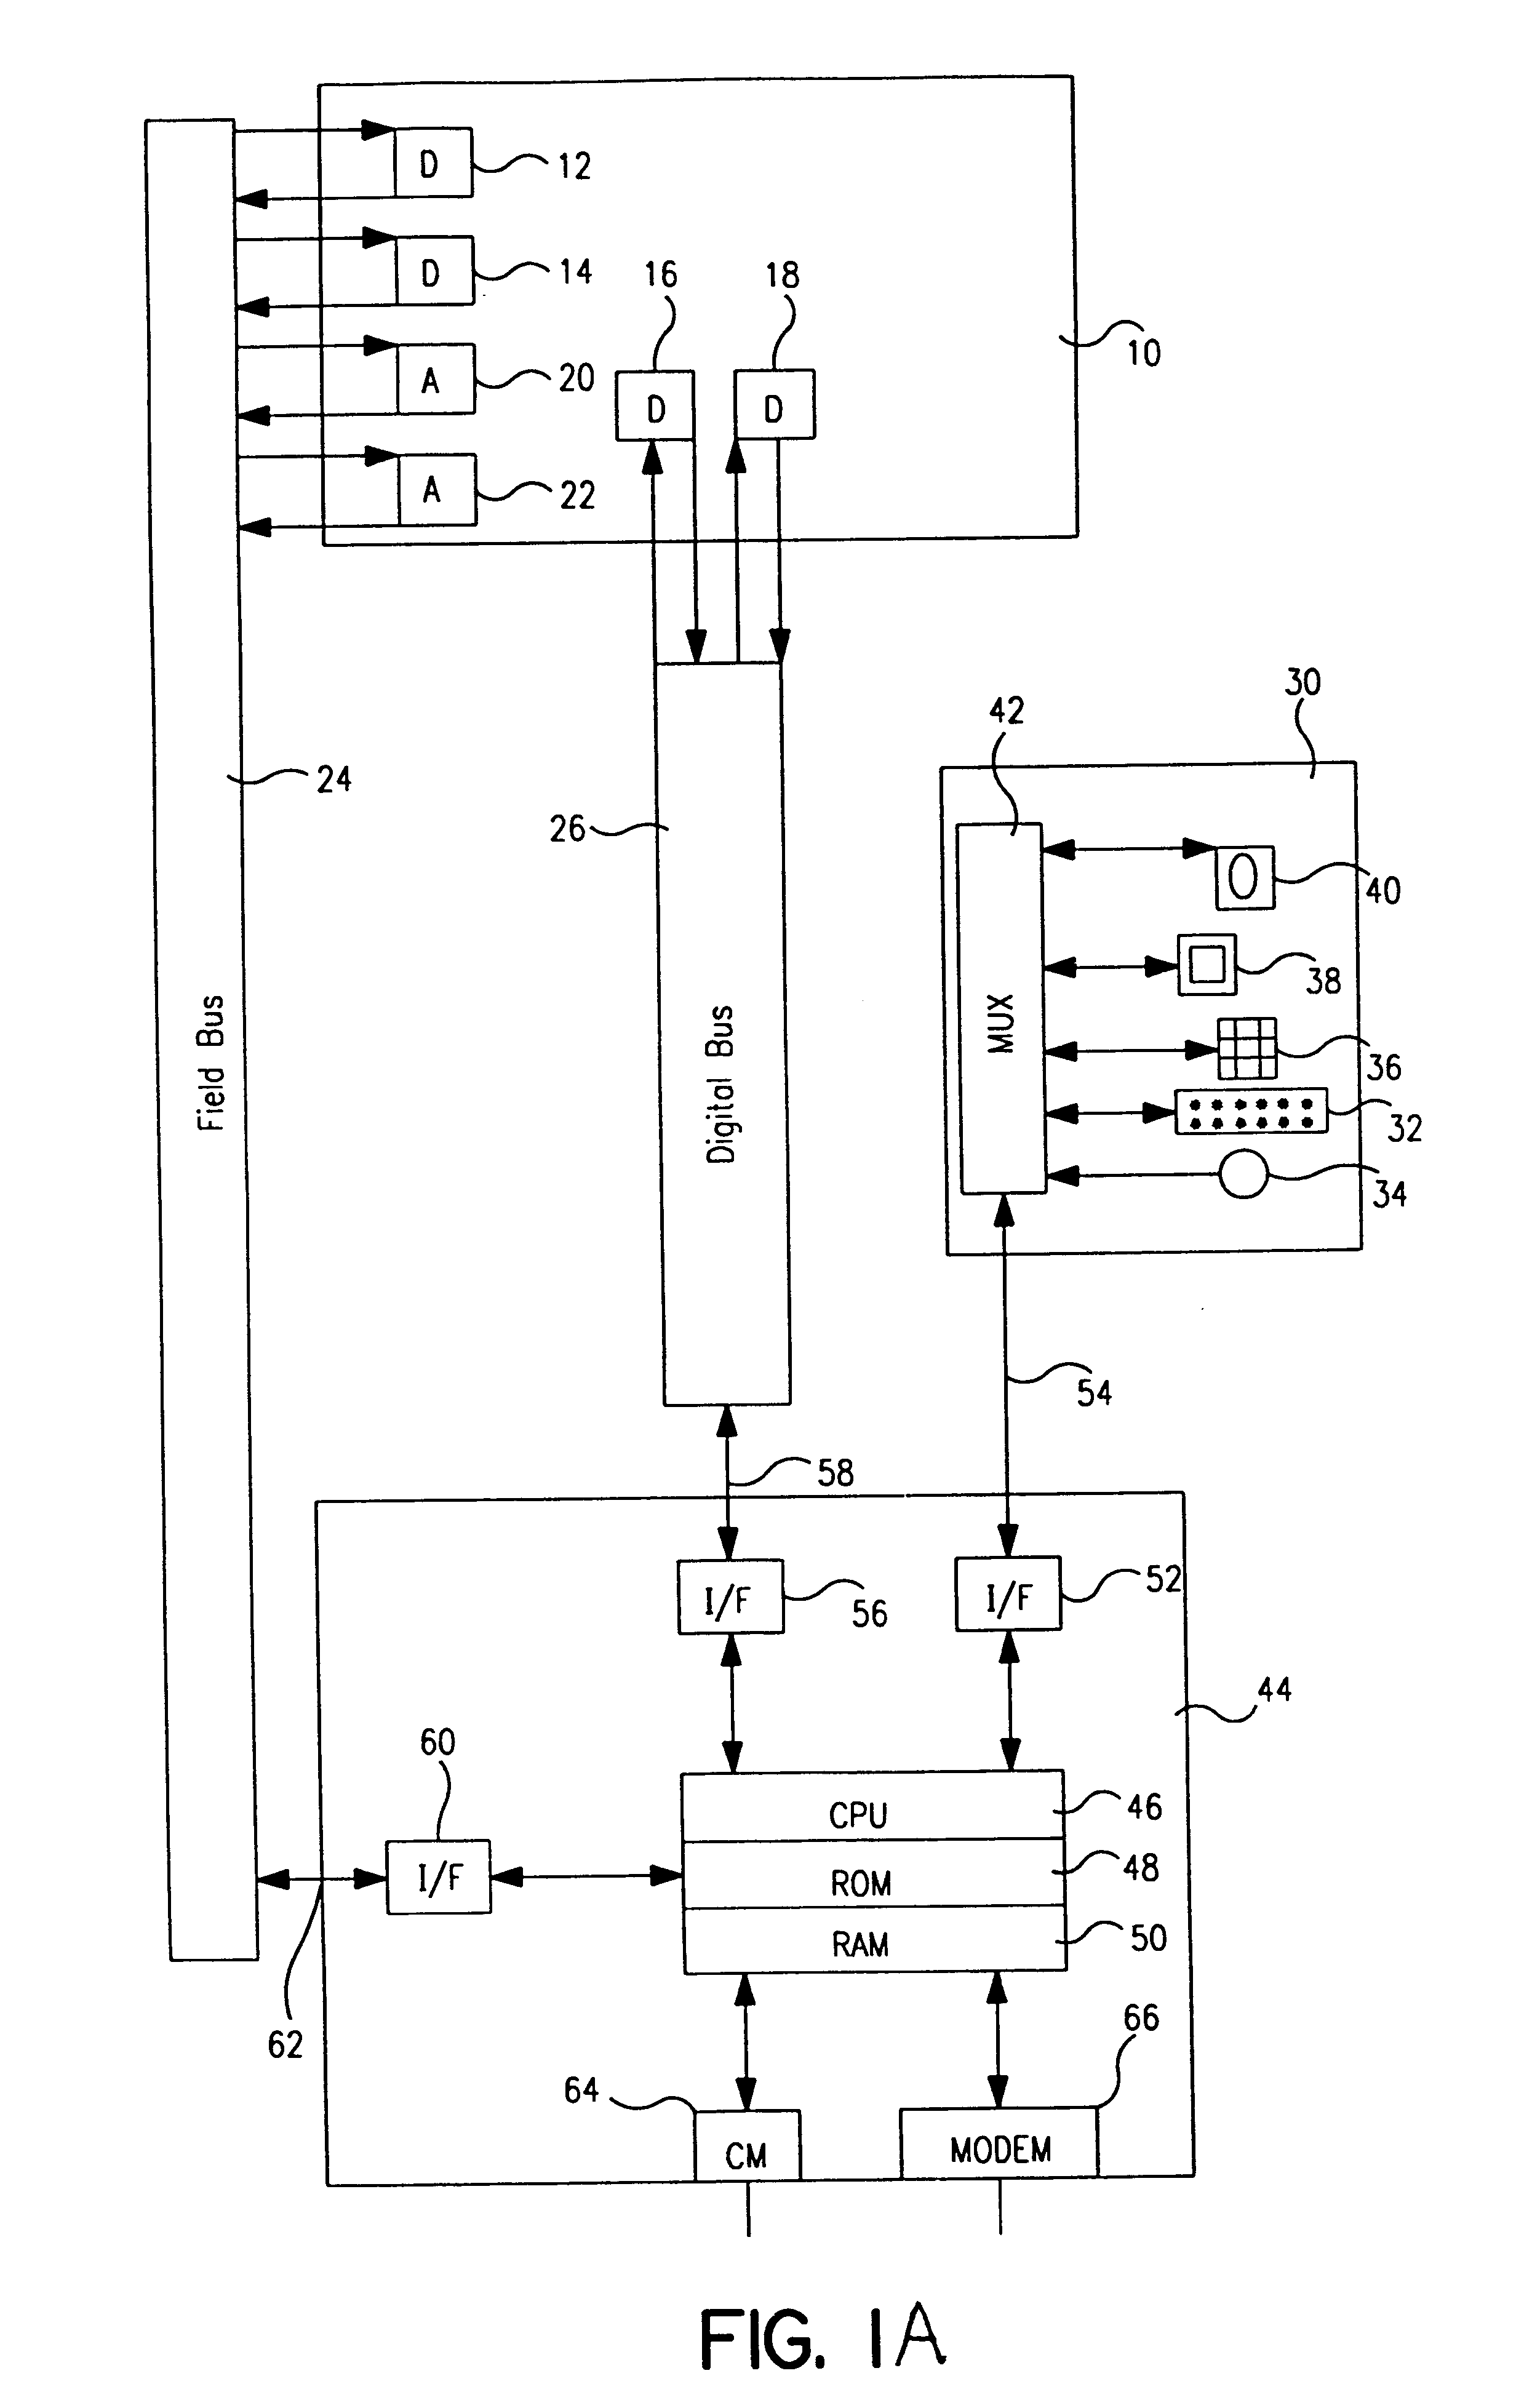 Method of simplifying machine operation